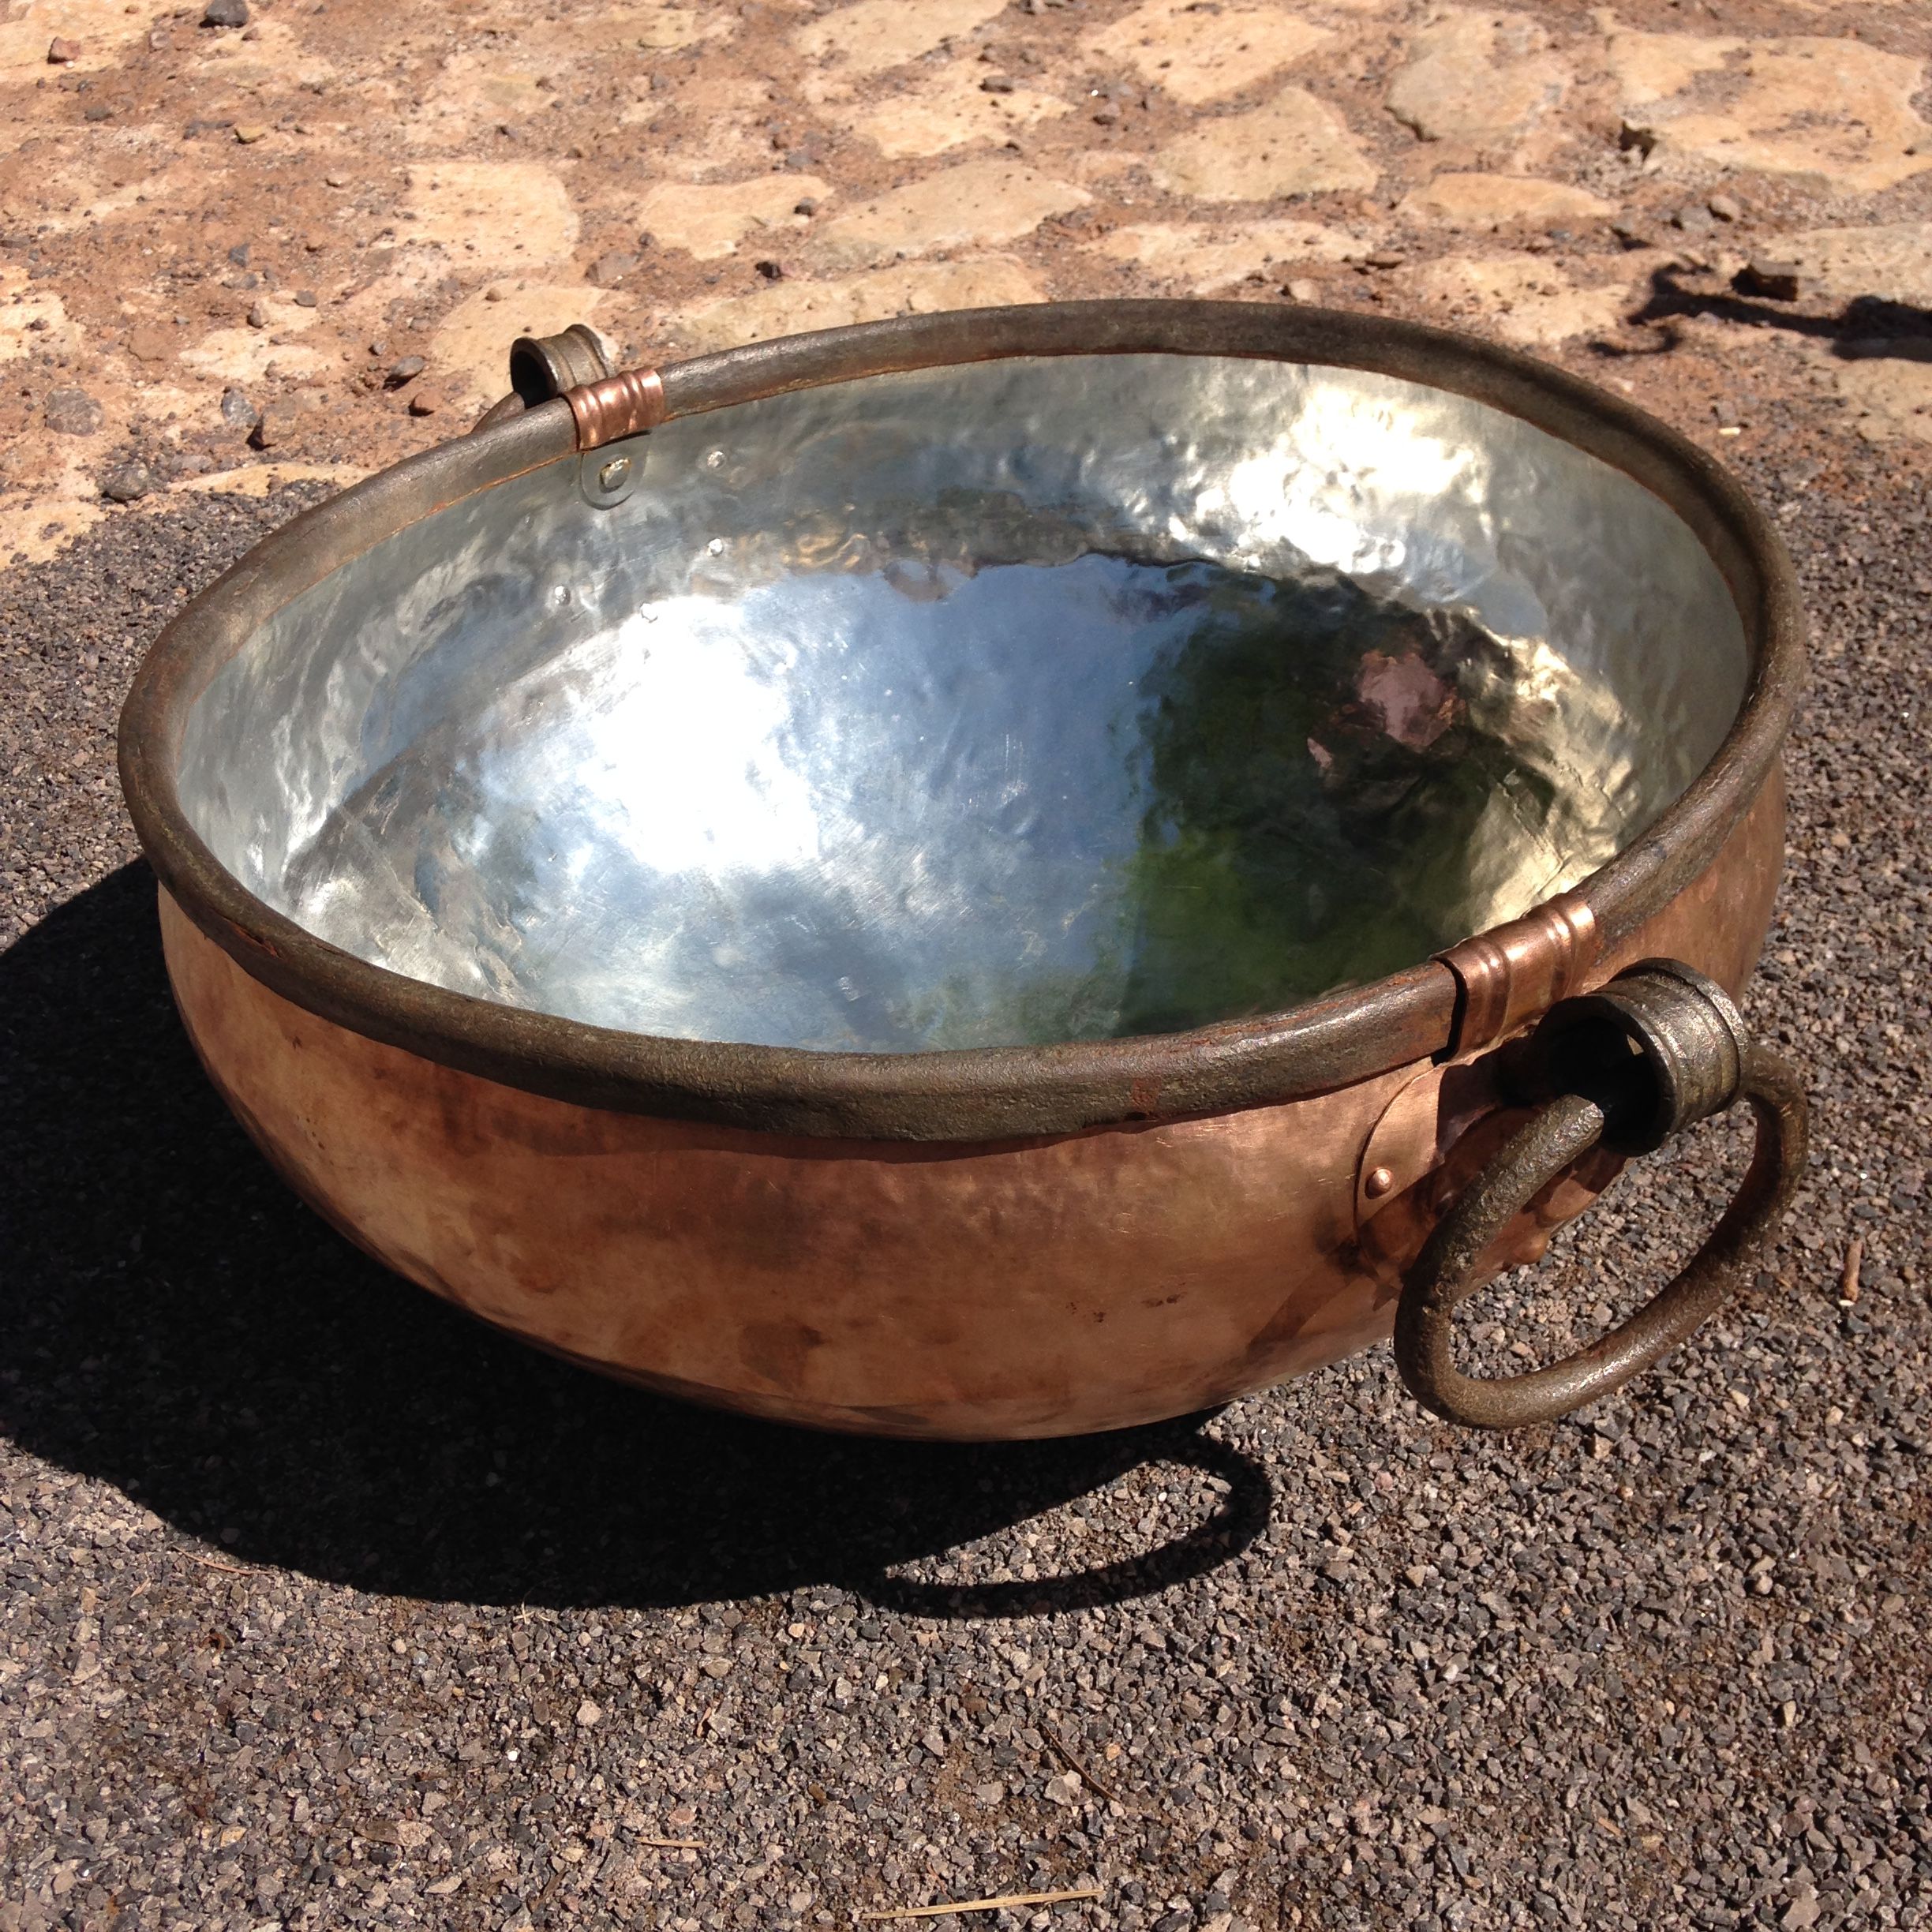 A close-up of the copper cauldron